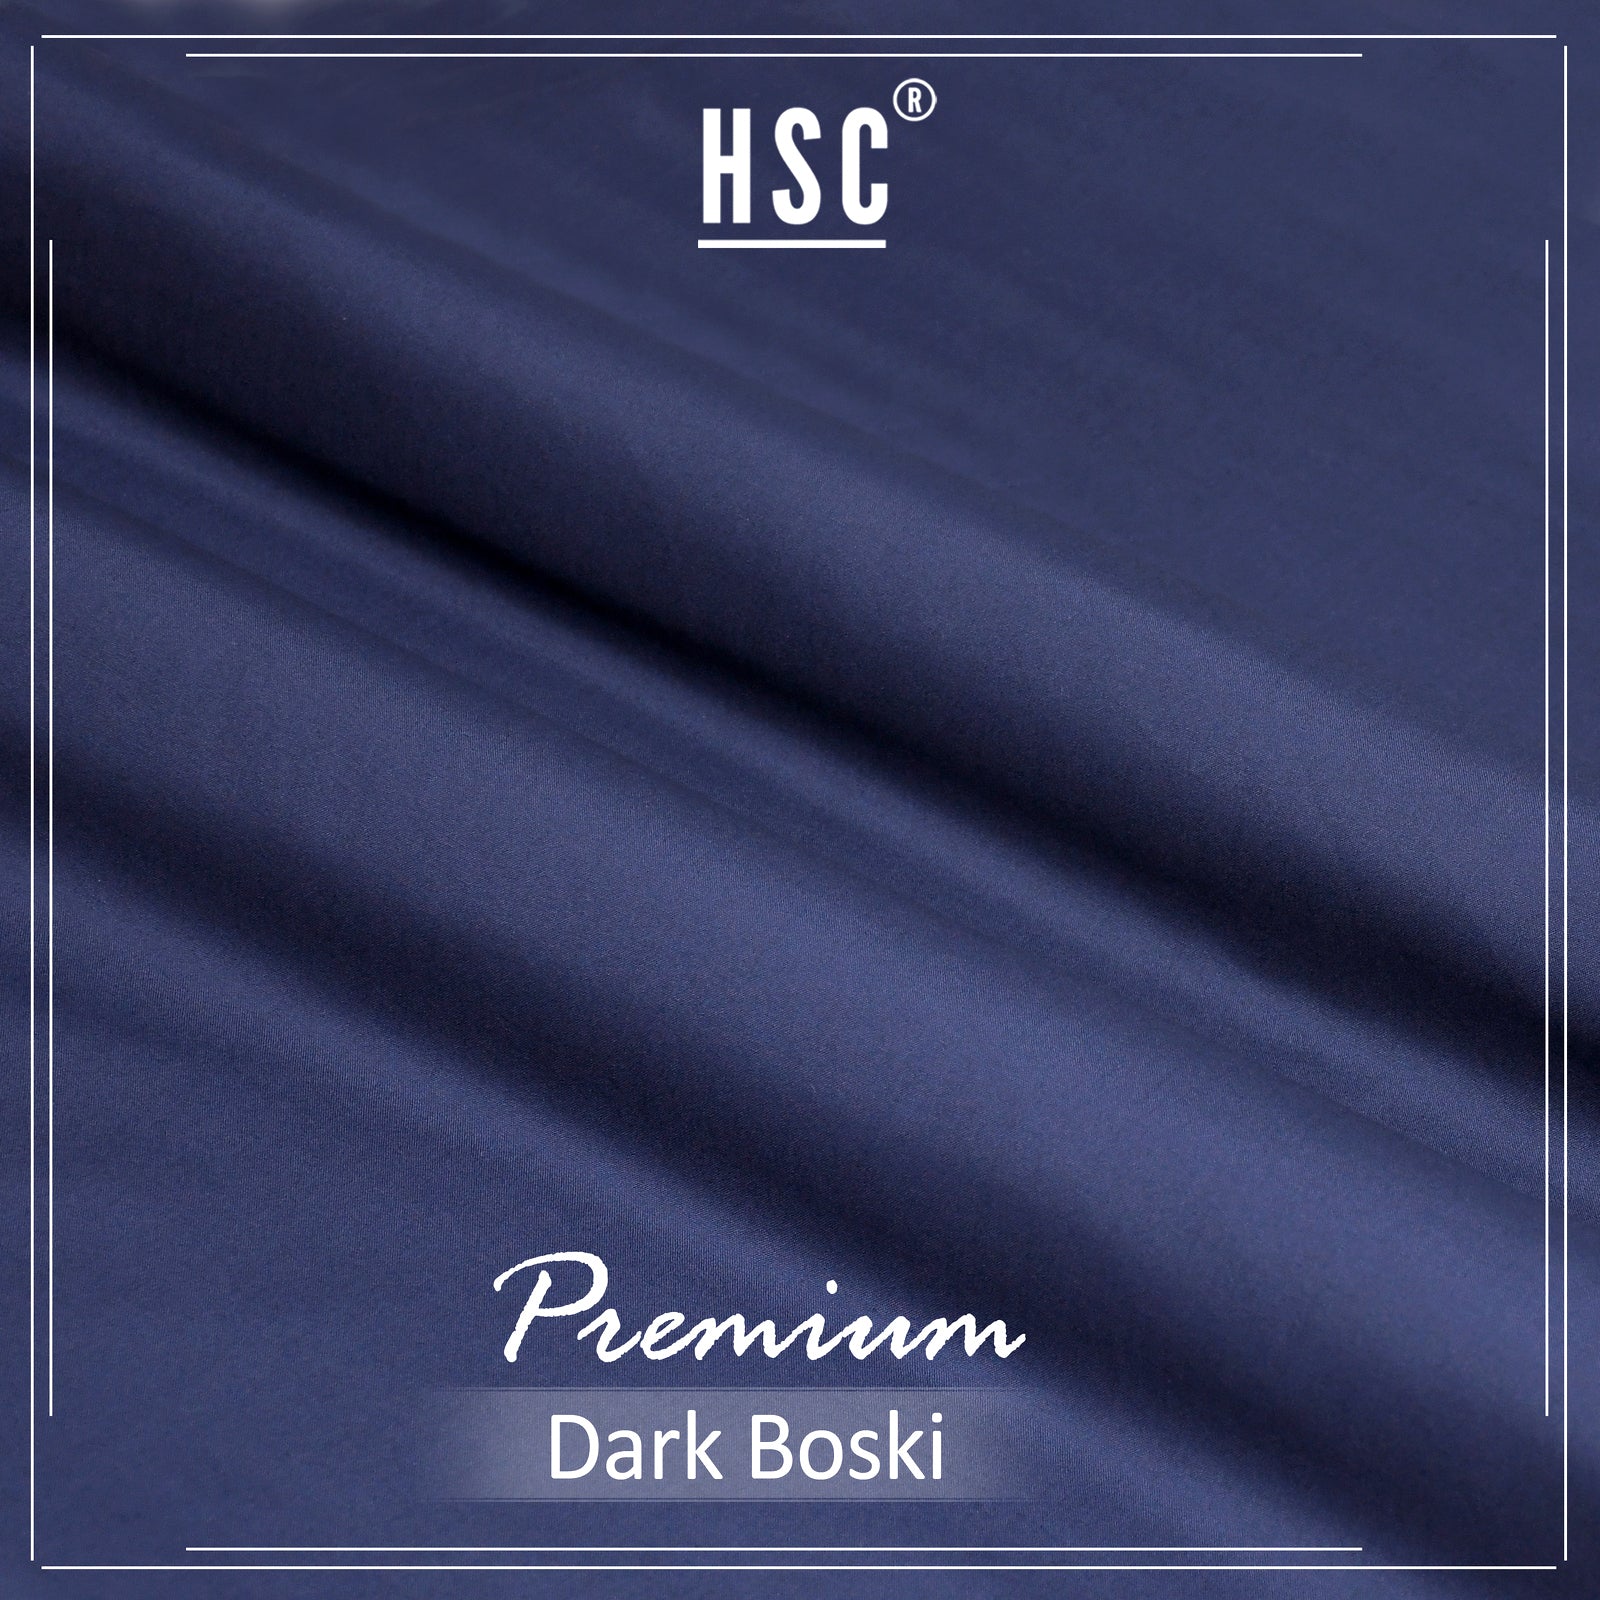 Buy1 Get 1 Free Premium Dark Boski For Men - PDB15 HSC